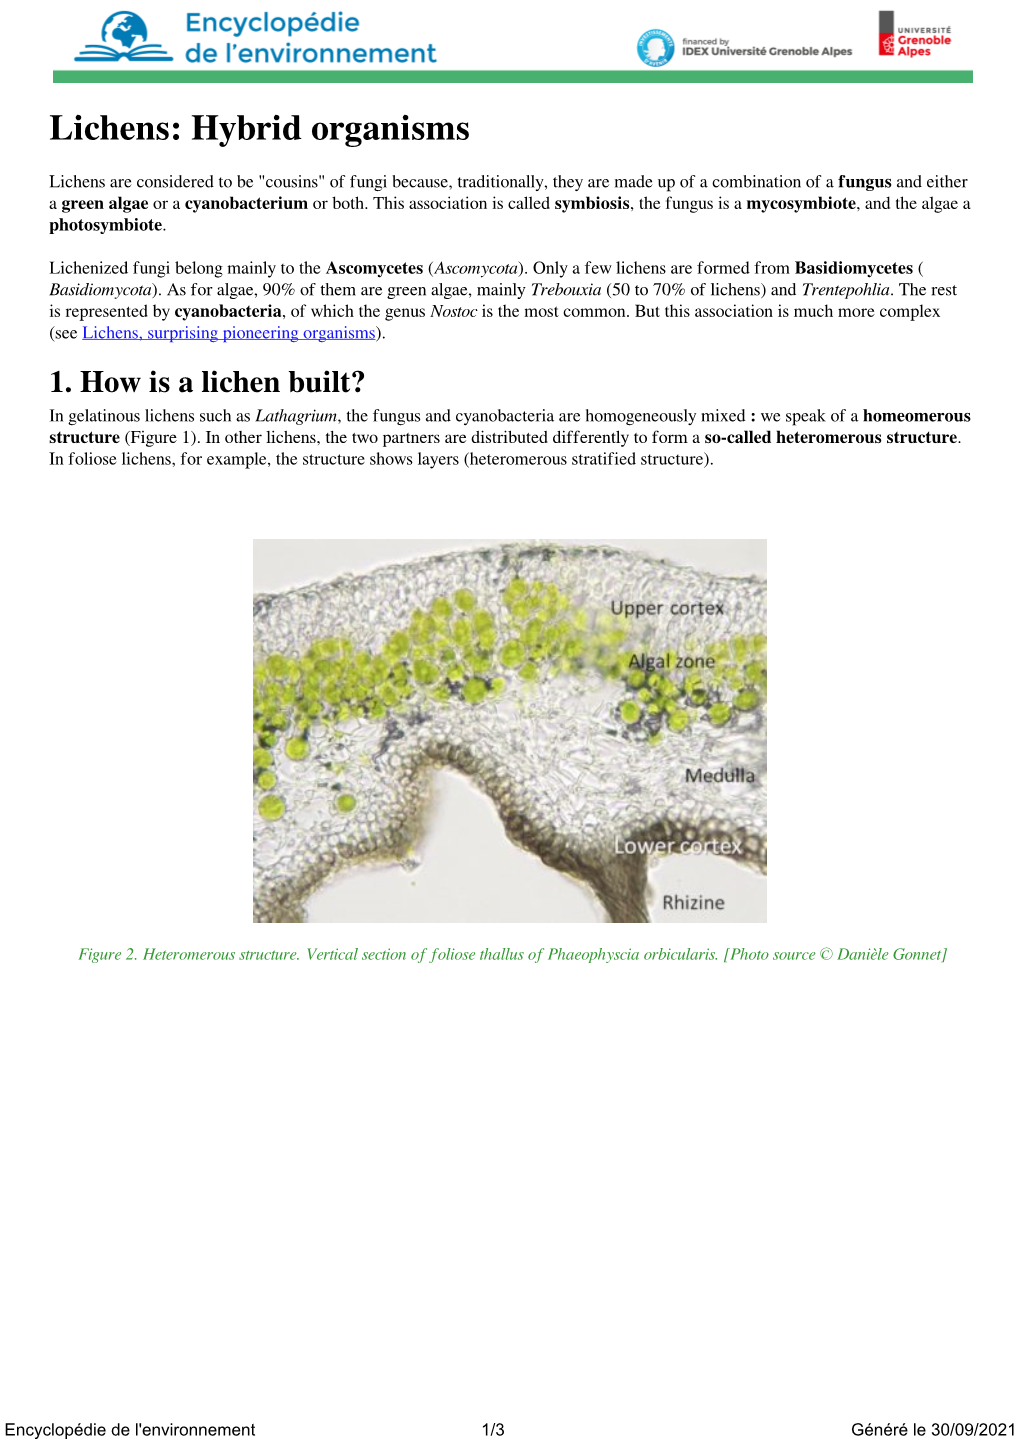 Lichens: Hybrid Organisms